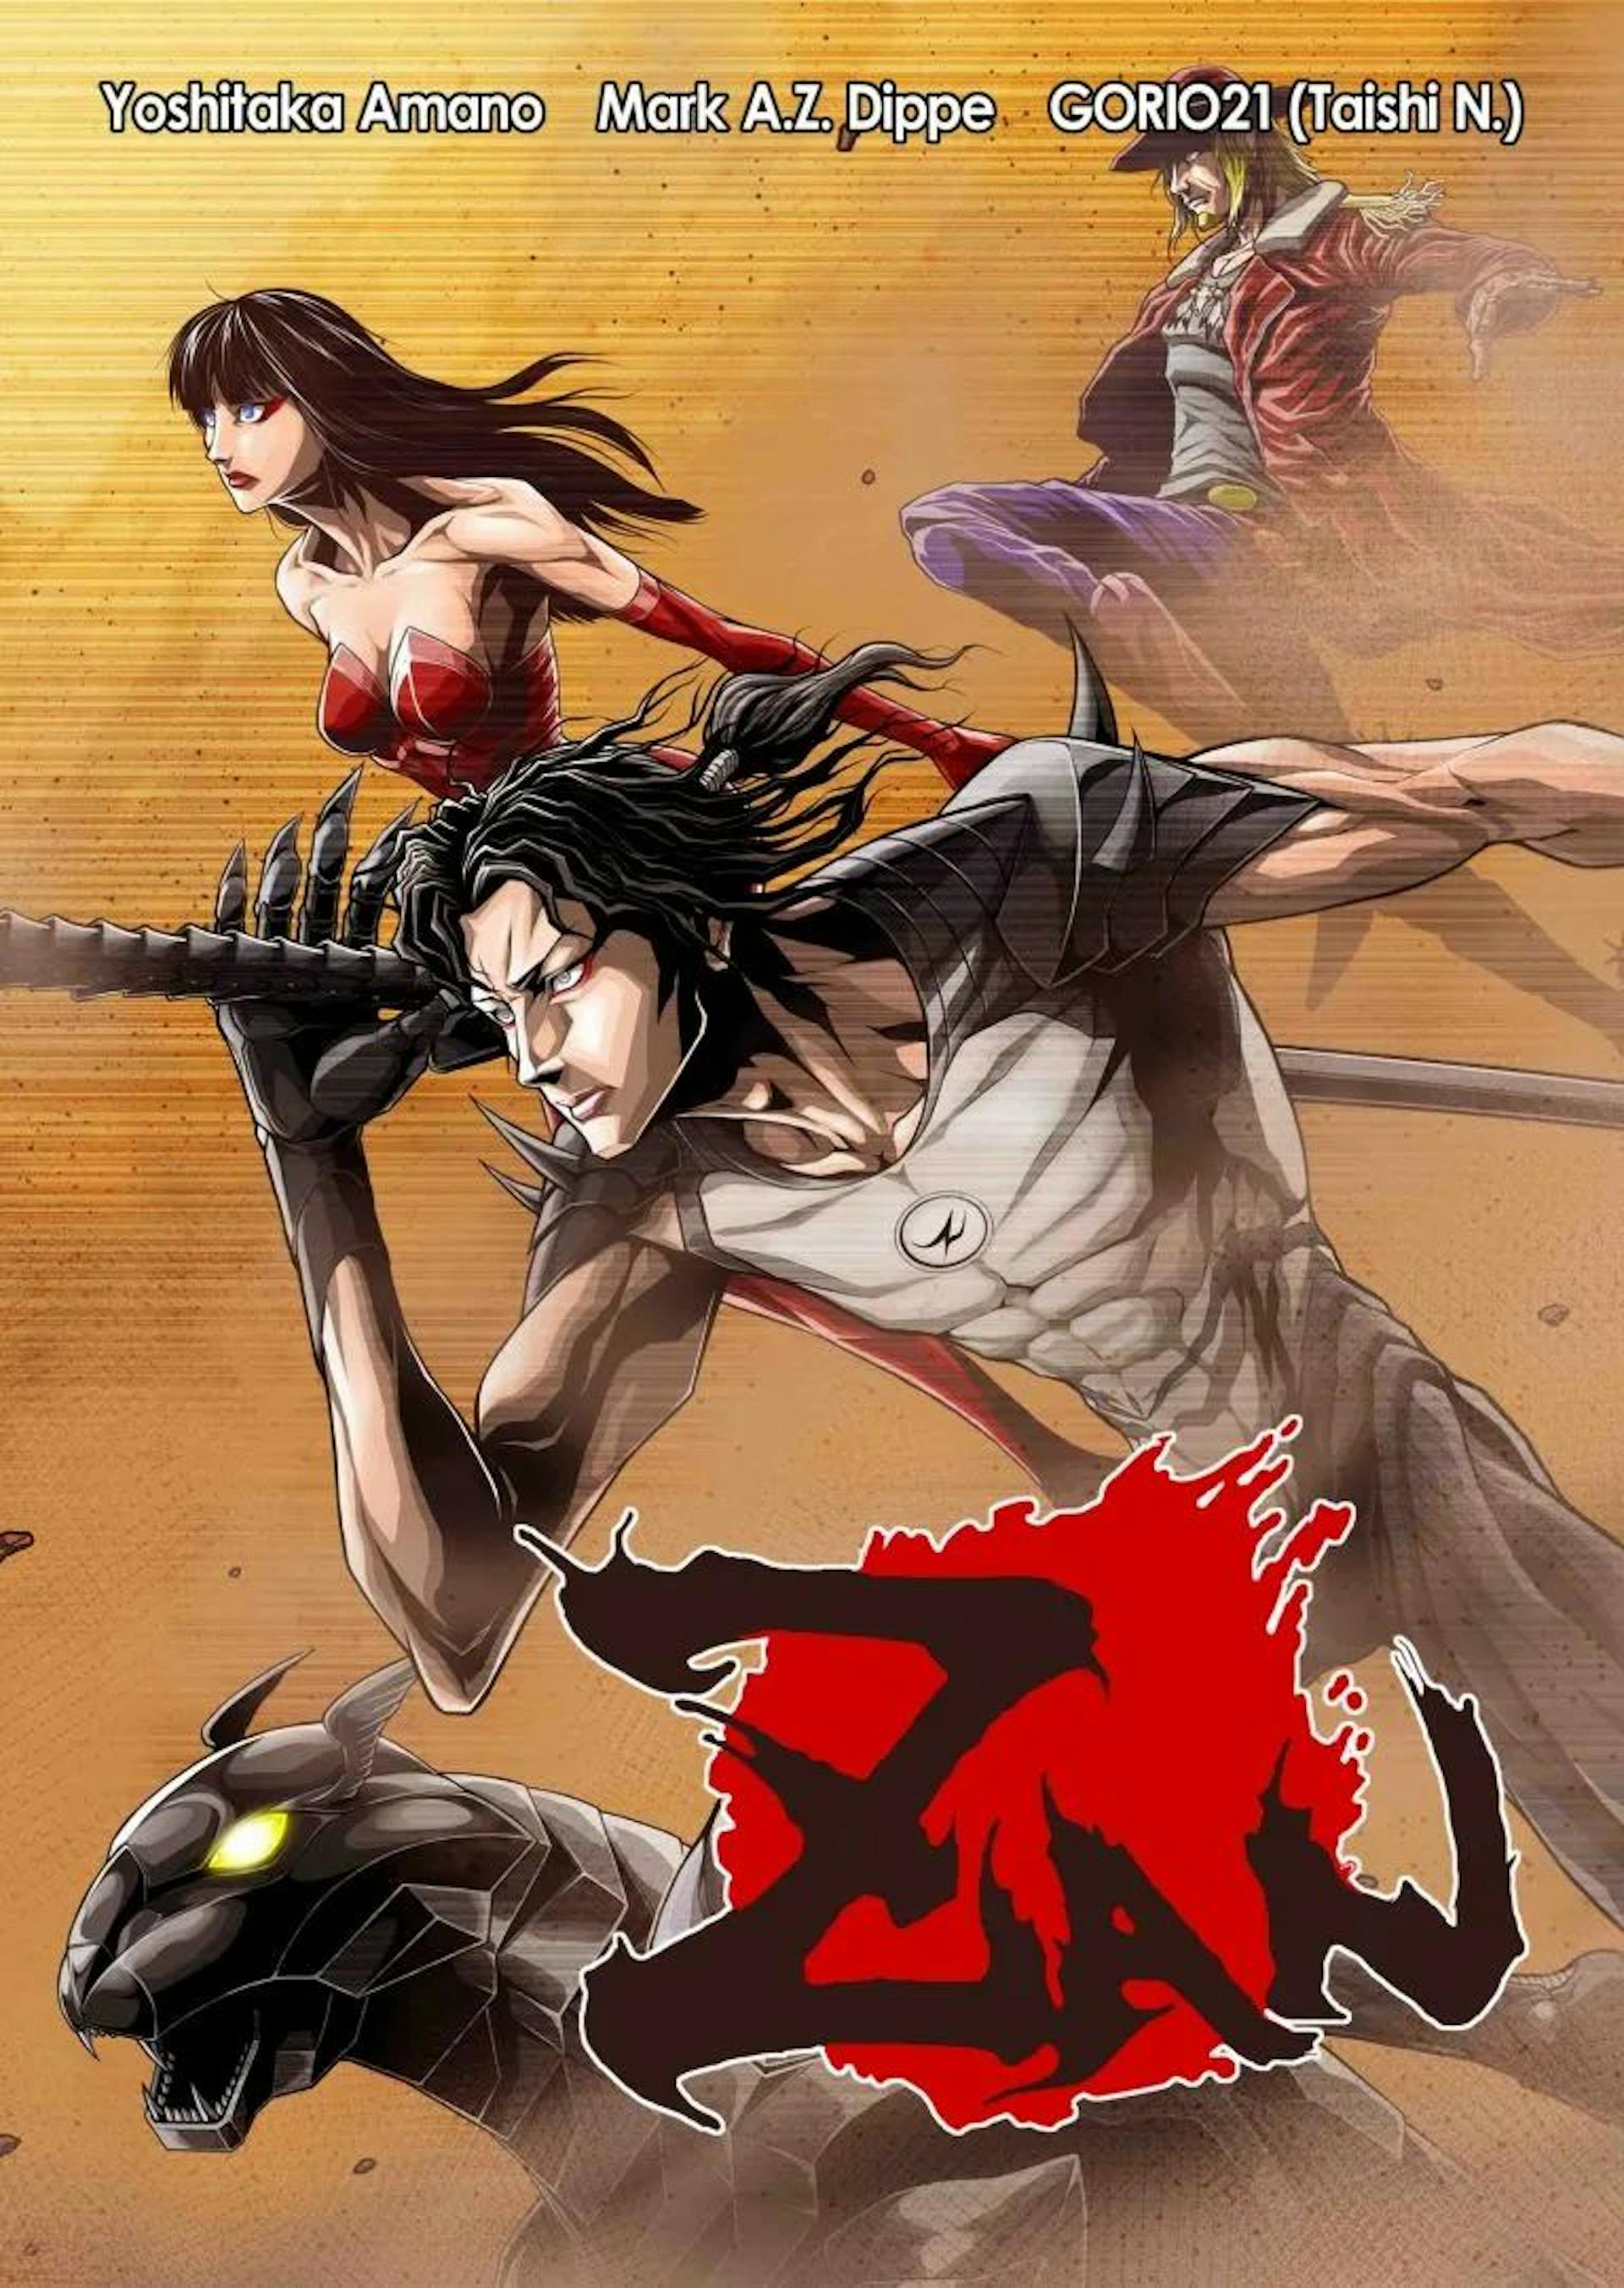 Zan, the manga series cover